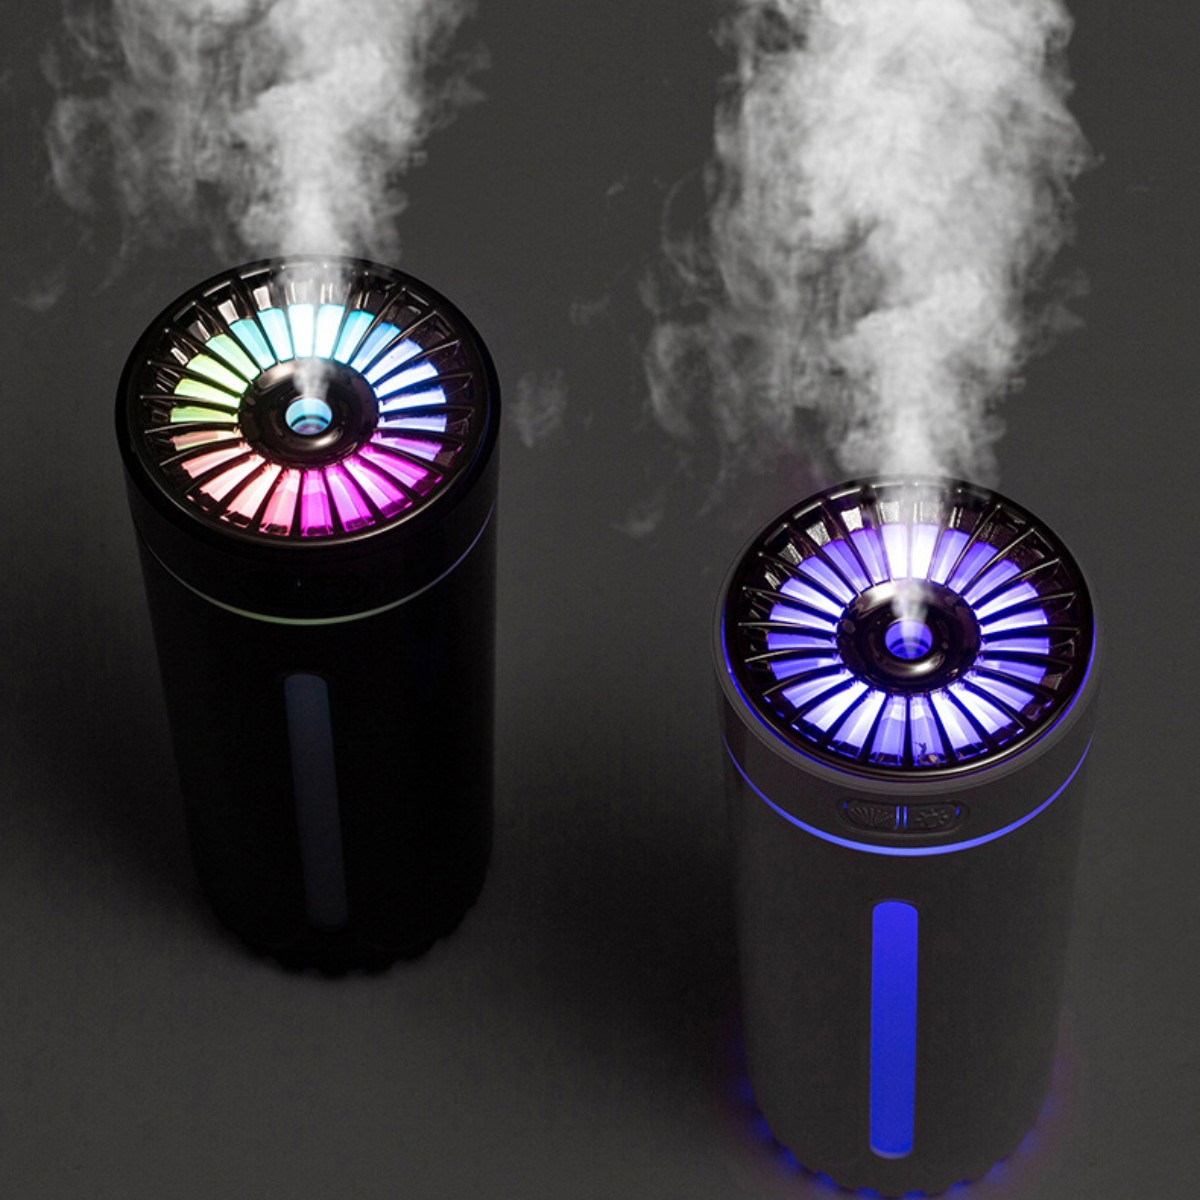 UWOT Luftbefeuchter LED (2 Raumgröße: Schwarz m²) Aroma-Luftbefeuchter 10 Luftbefeuchter Watt, effizienter Kompakter